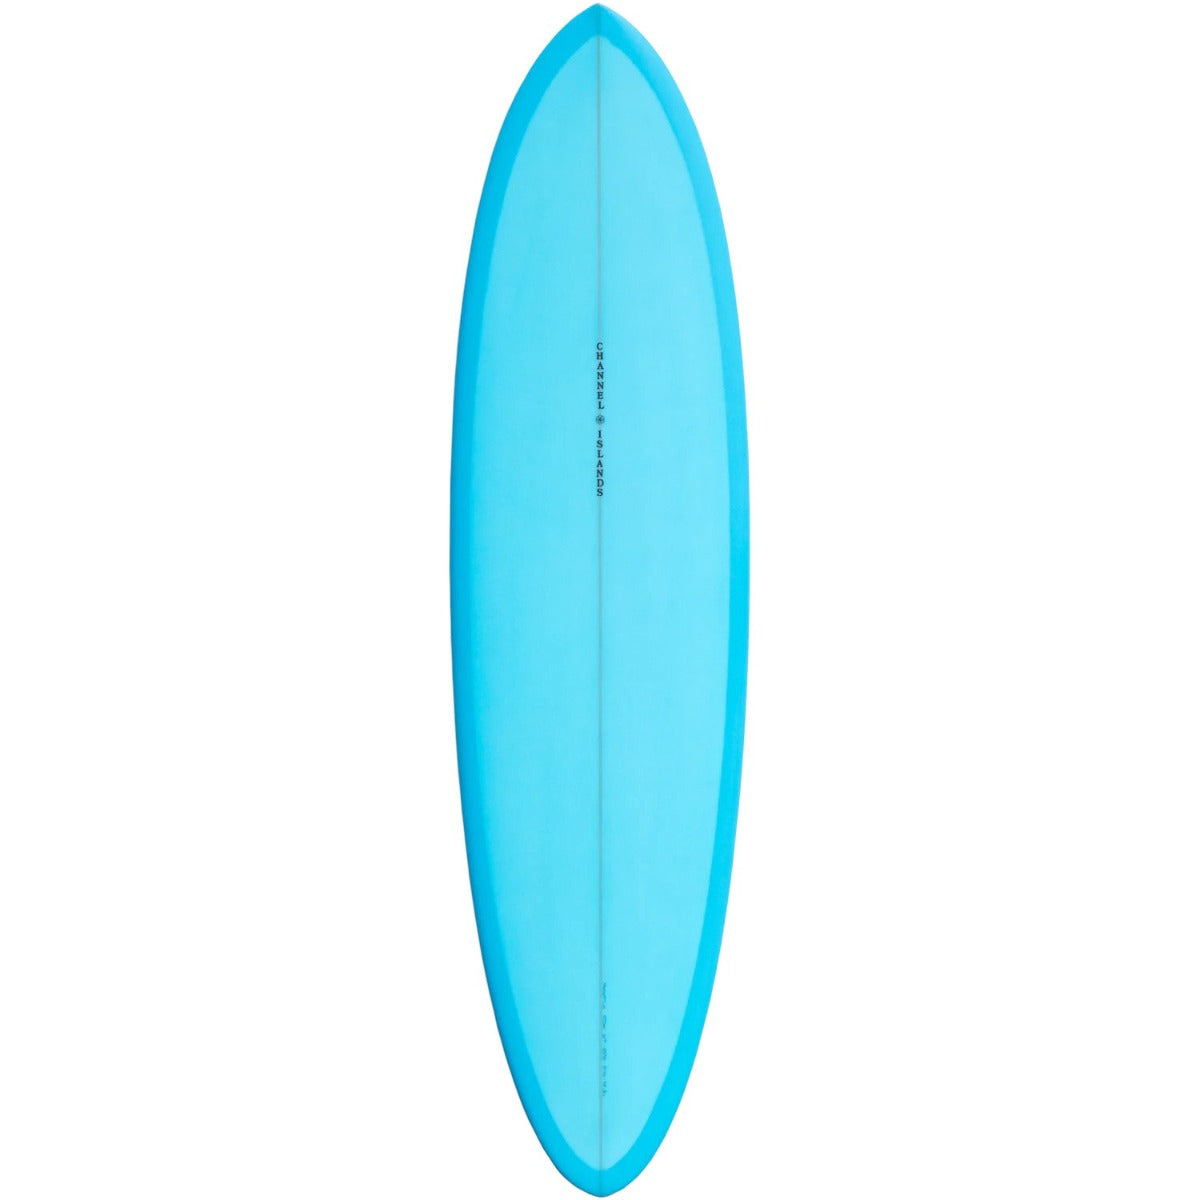 channel-islands-surfboards-midlength-ci-mid-blue-deck-galway-ireland-blacksheepsurfco